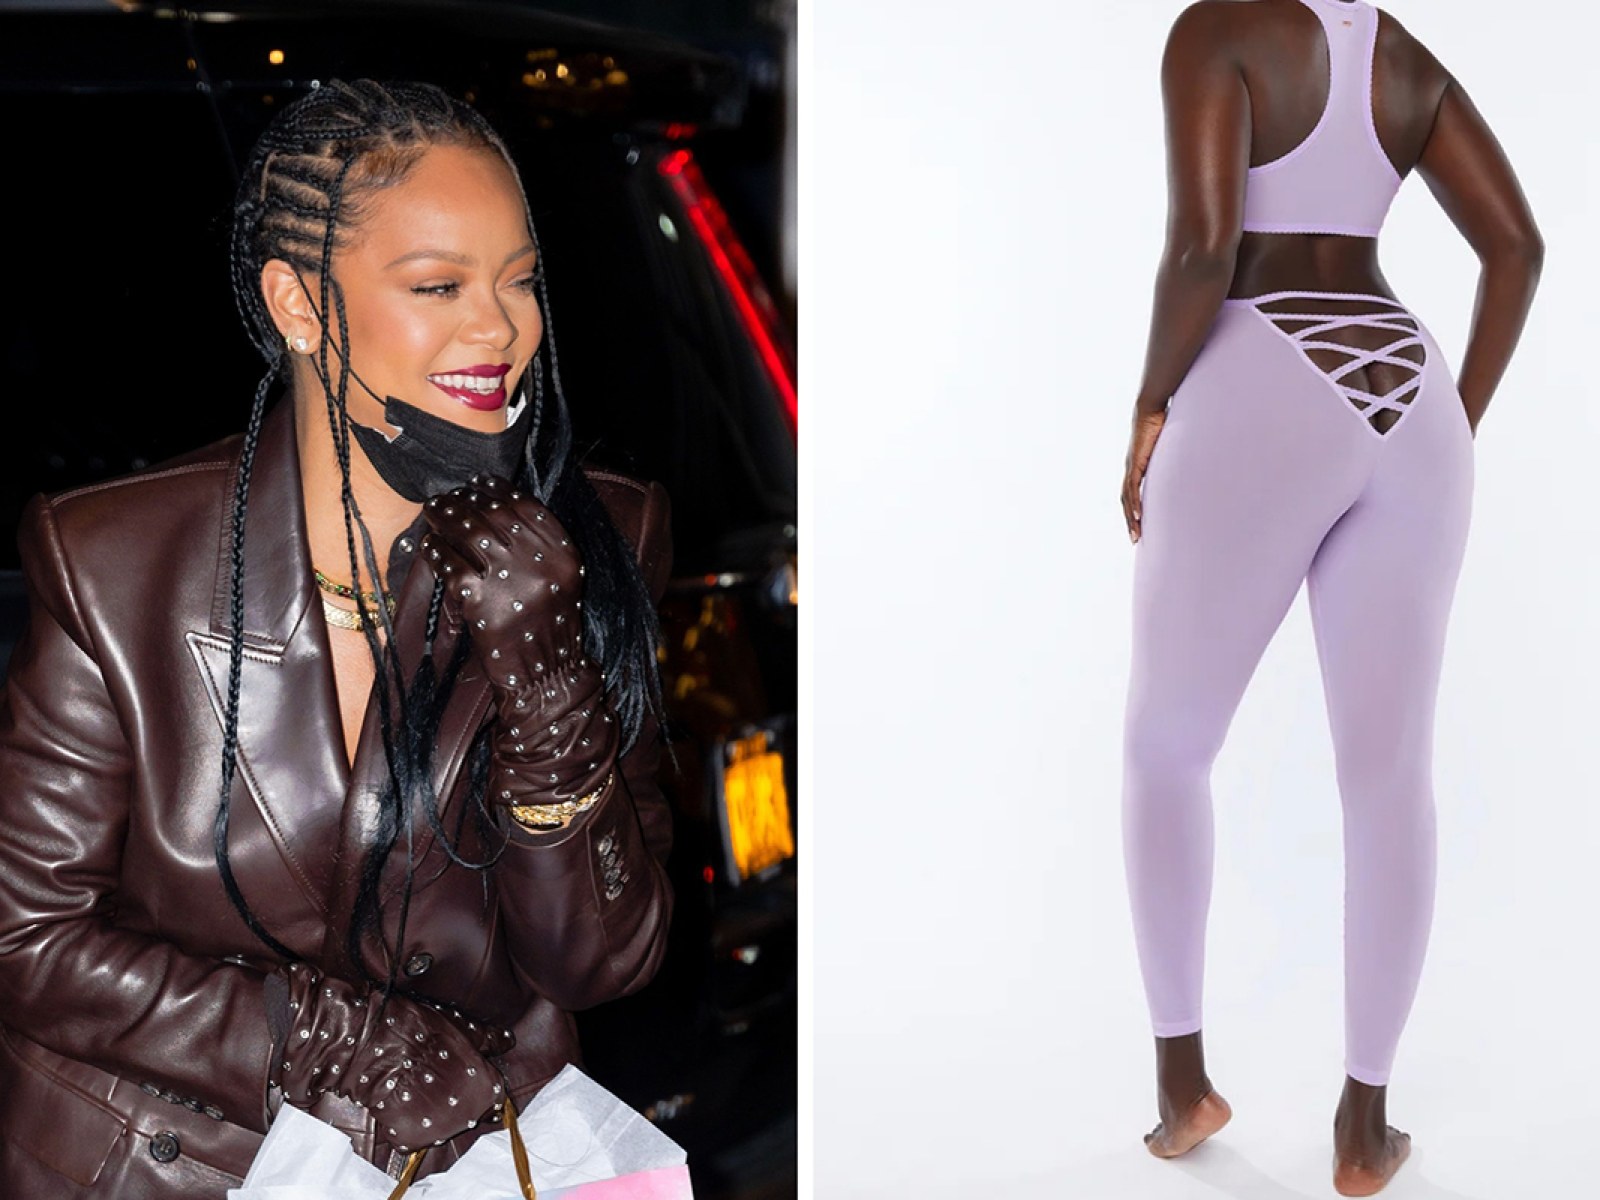 TikTok users baffled by 'open-back' leggings from Rihanna's brand